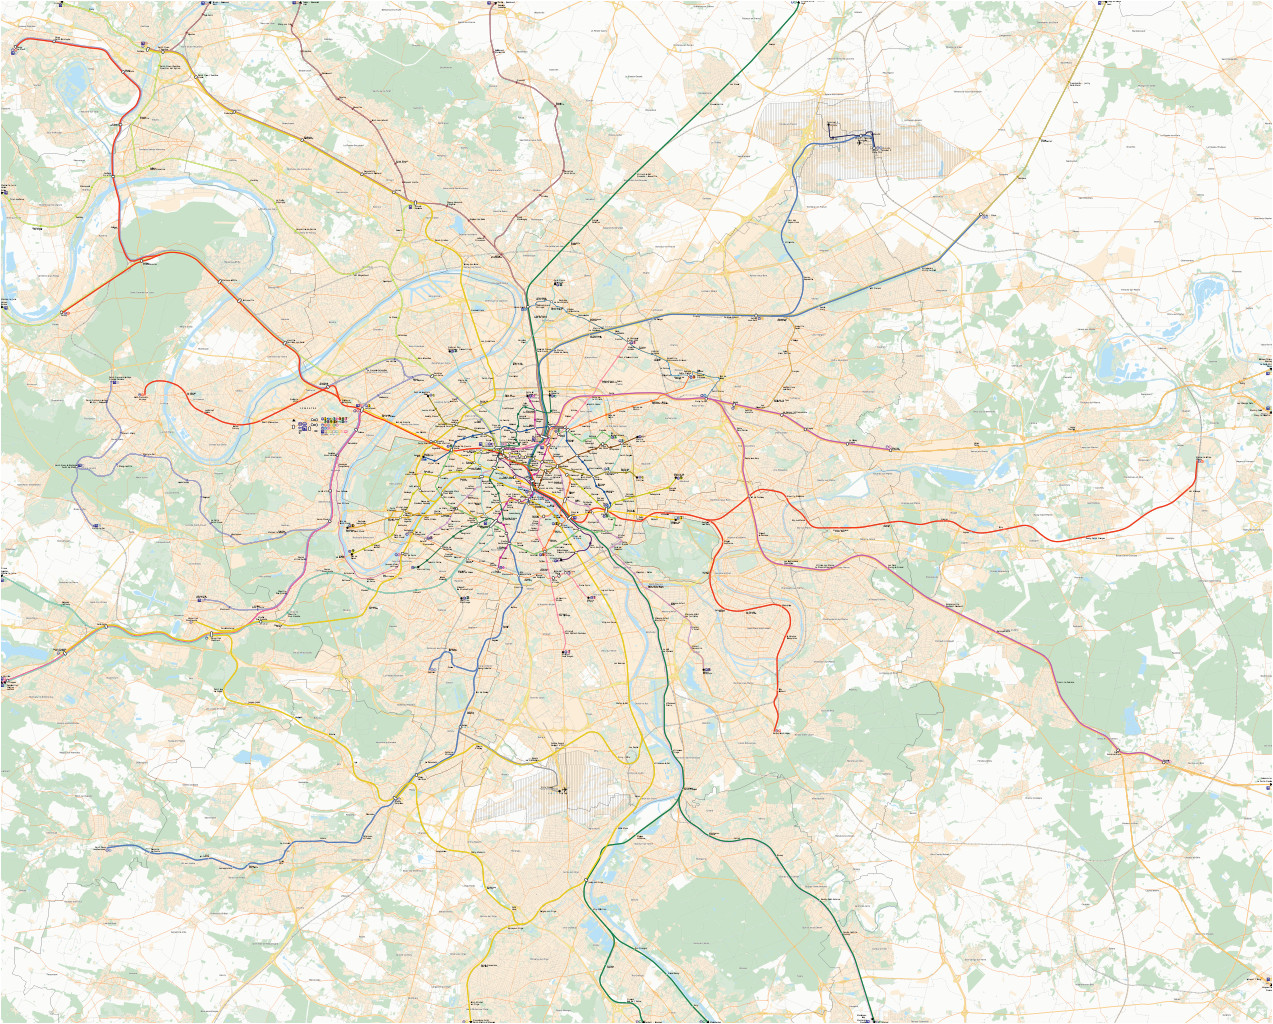 France Rer Map File Paris Public Transports Svg Wikimedia Commons